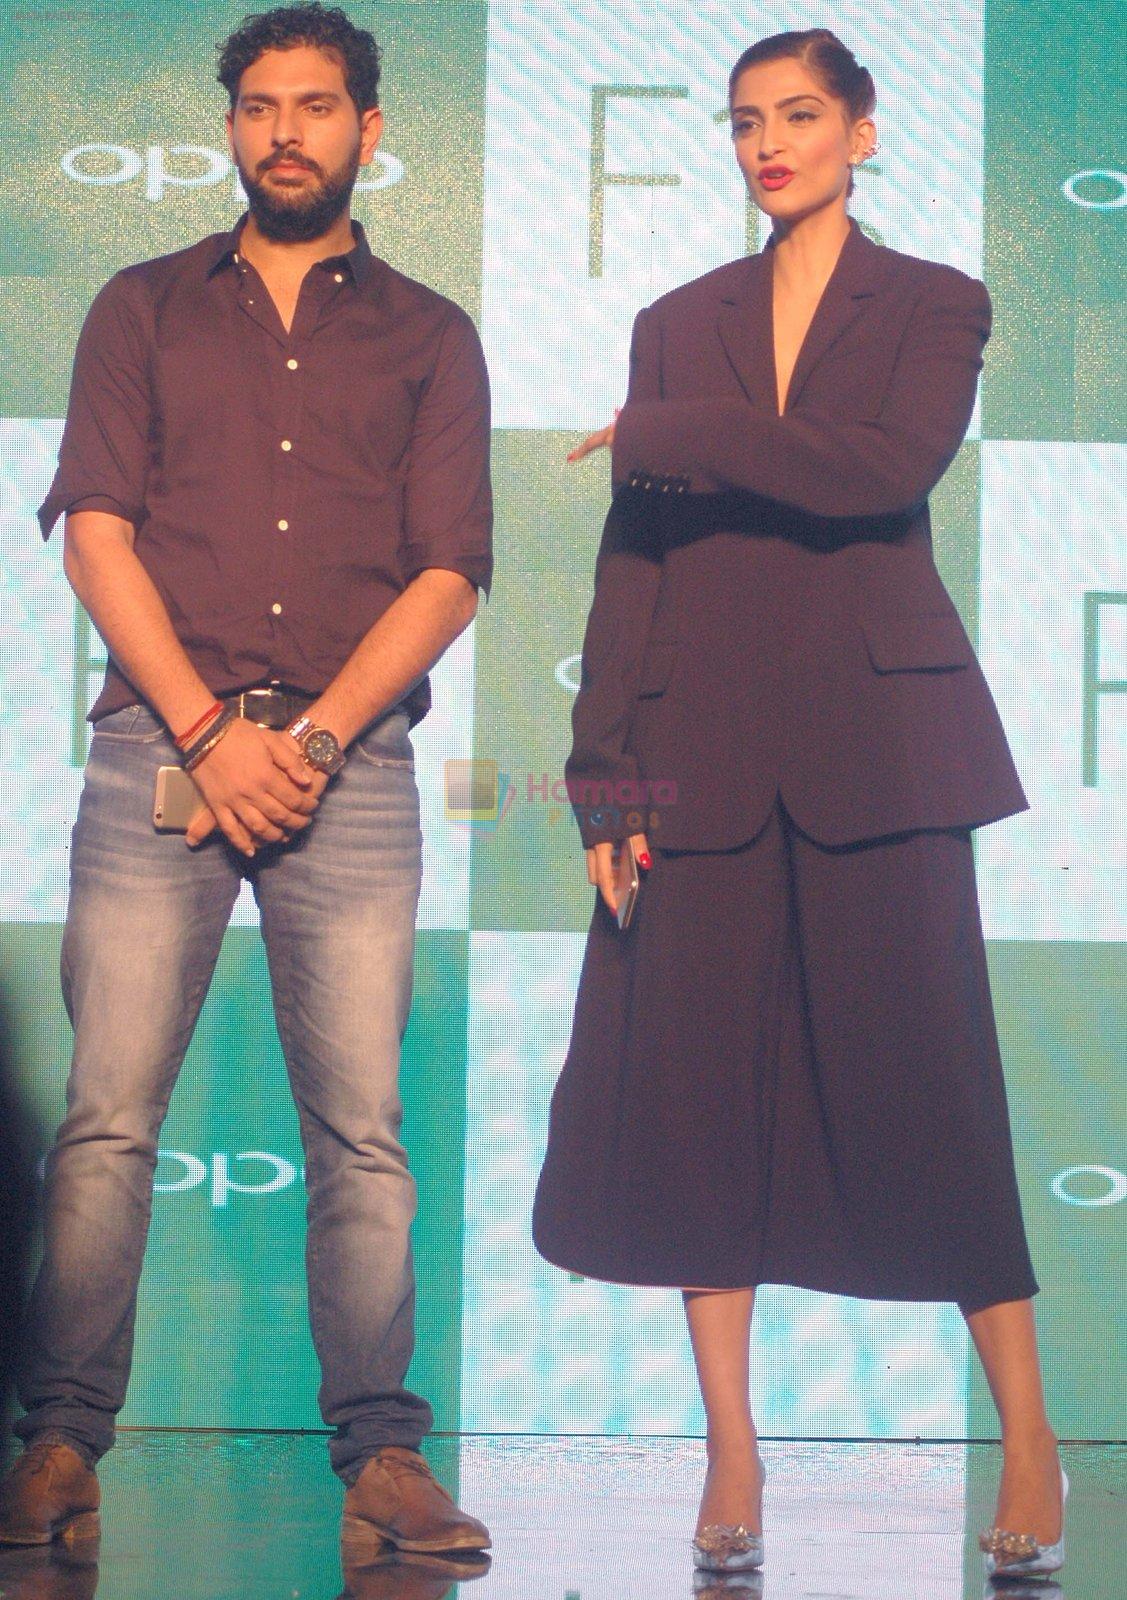 Sonam Kapoor, Yuvraj Singh at Oppo F1s mobile launch in Mumbai on 3rd Aug 2016